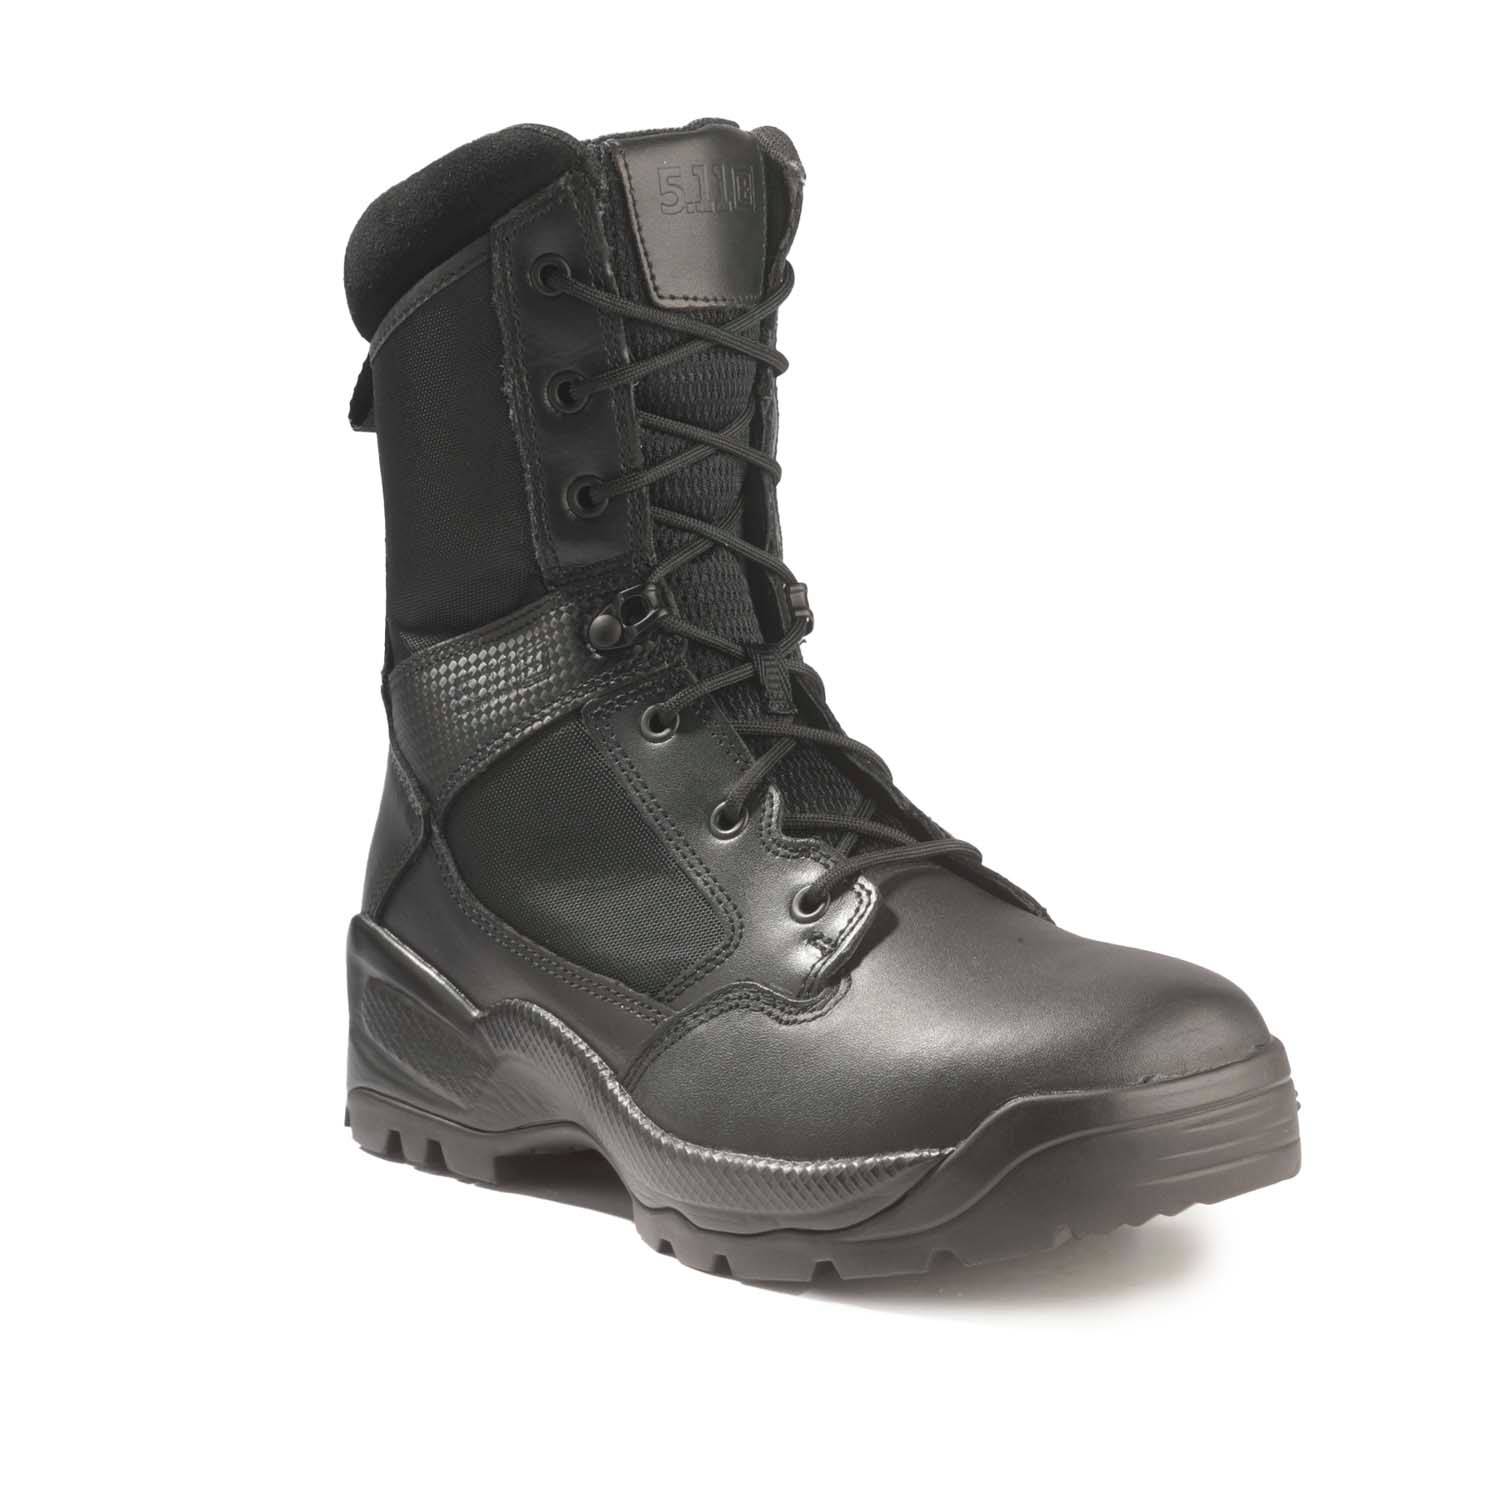 5.11 tactical steel toe boots